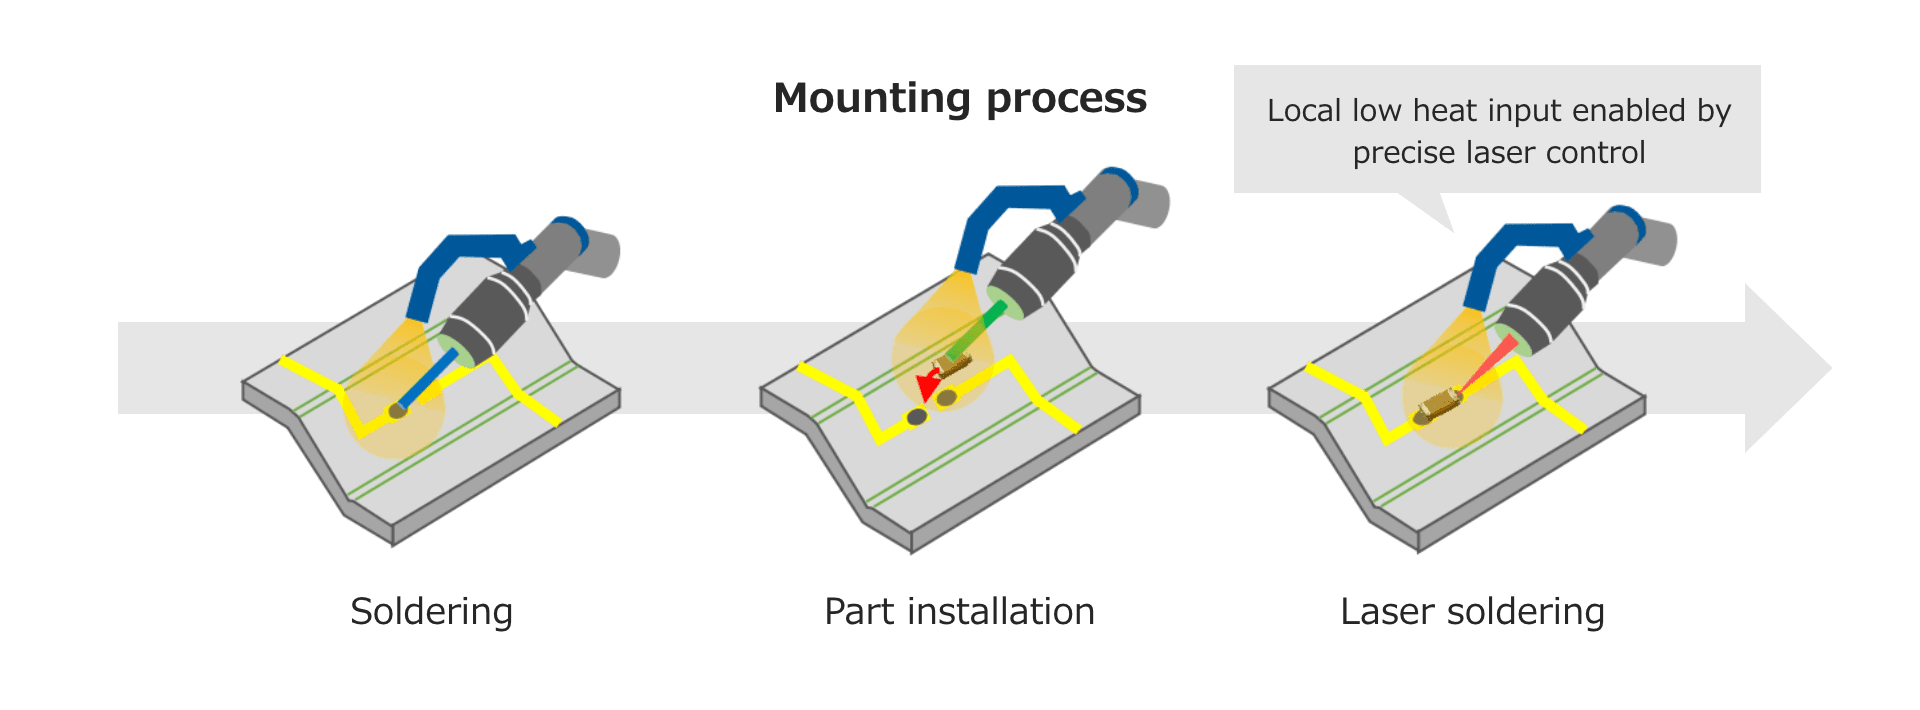 Mounting process using a robot